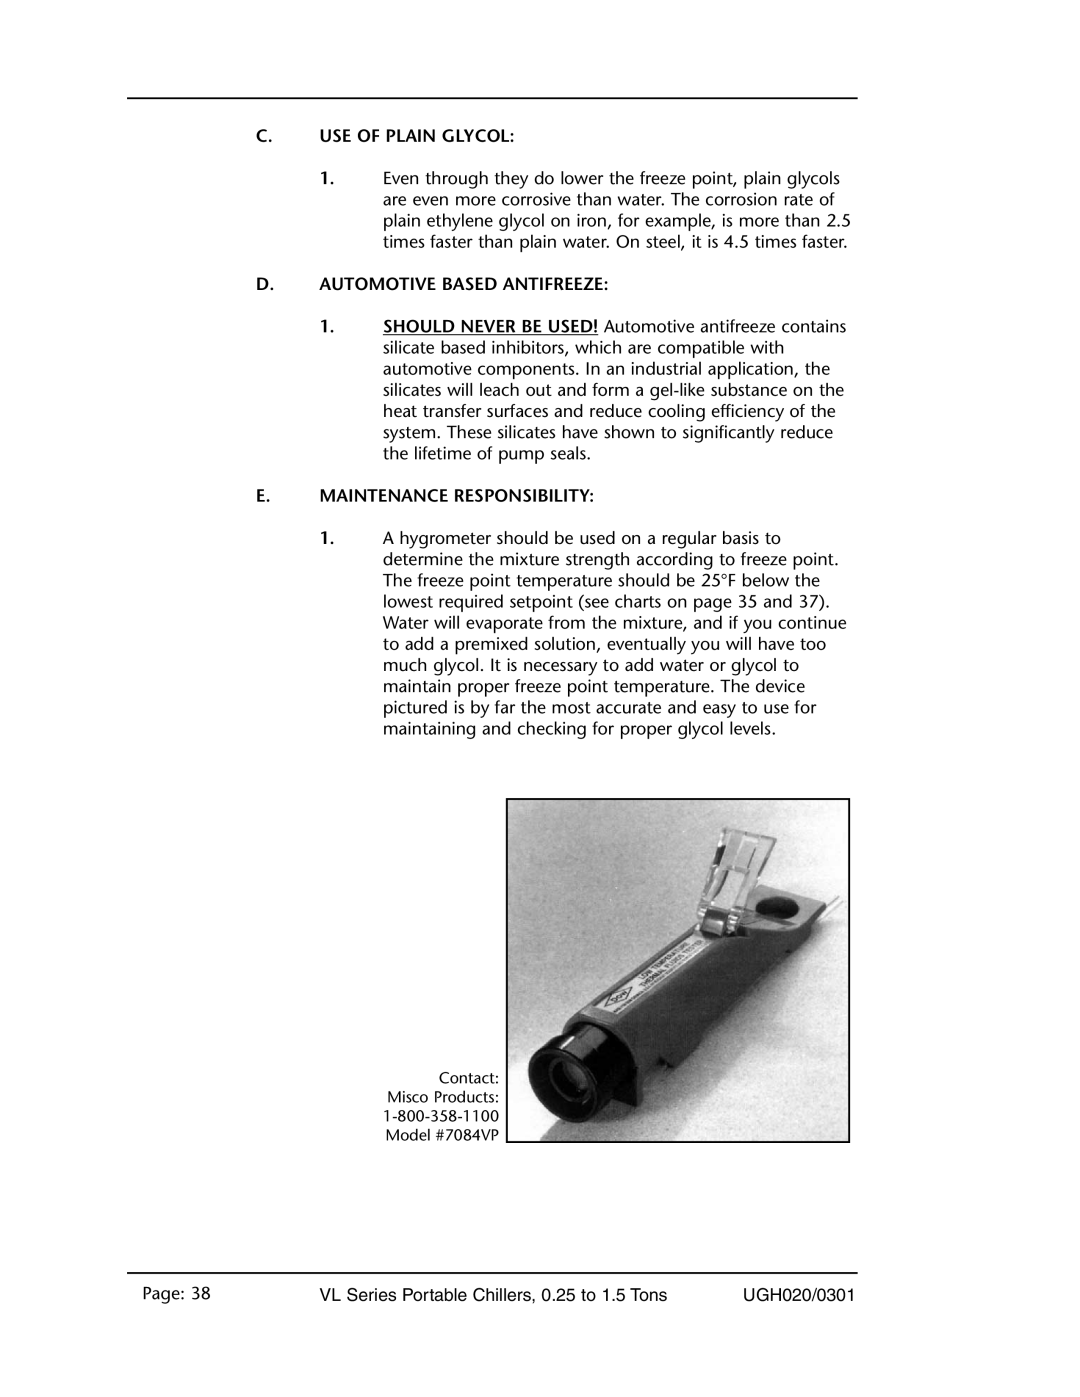 Conair VL Series manual C.Use Of Plain Glycol, D.Automotive Based Antifreeze, E.Maintenance Responsibility 